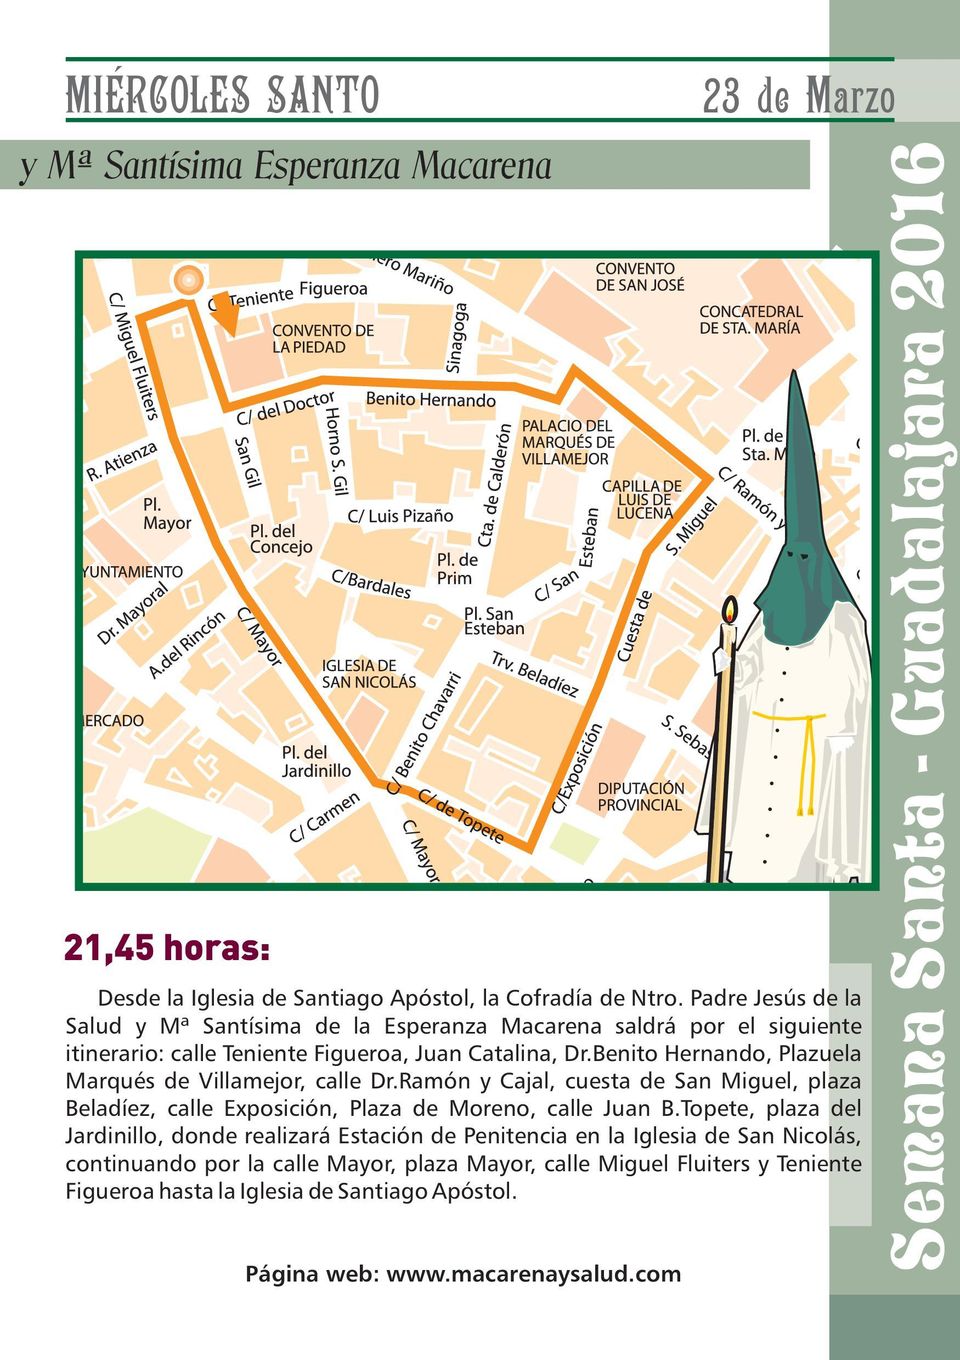 Benito Hernando, Plazuela Marqués de Villamejor, calle Dr.Ramón y Cajal, cuesta de San Miguel, plaza Beladíez, calle Exposición, Plaza de Moreno, calle Juan B.